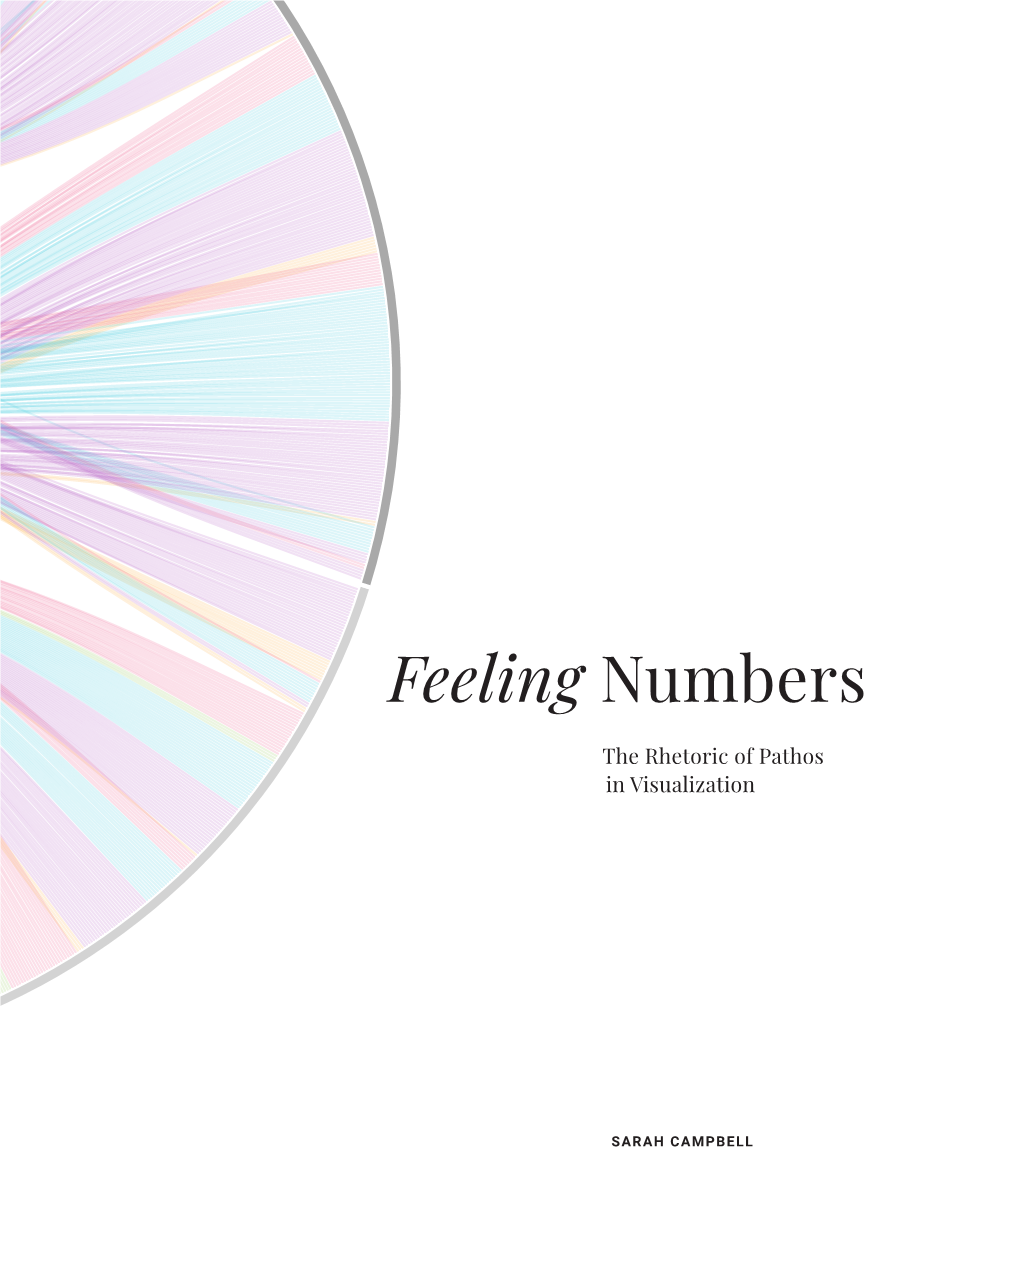 Feeling Numbers: the Rhetoric of Pathos in Visualization